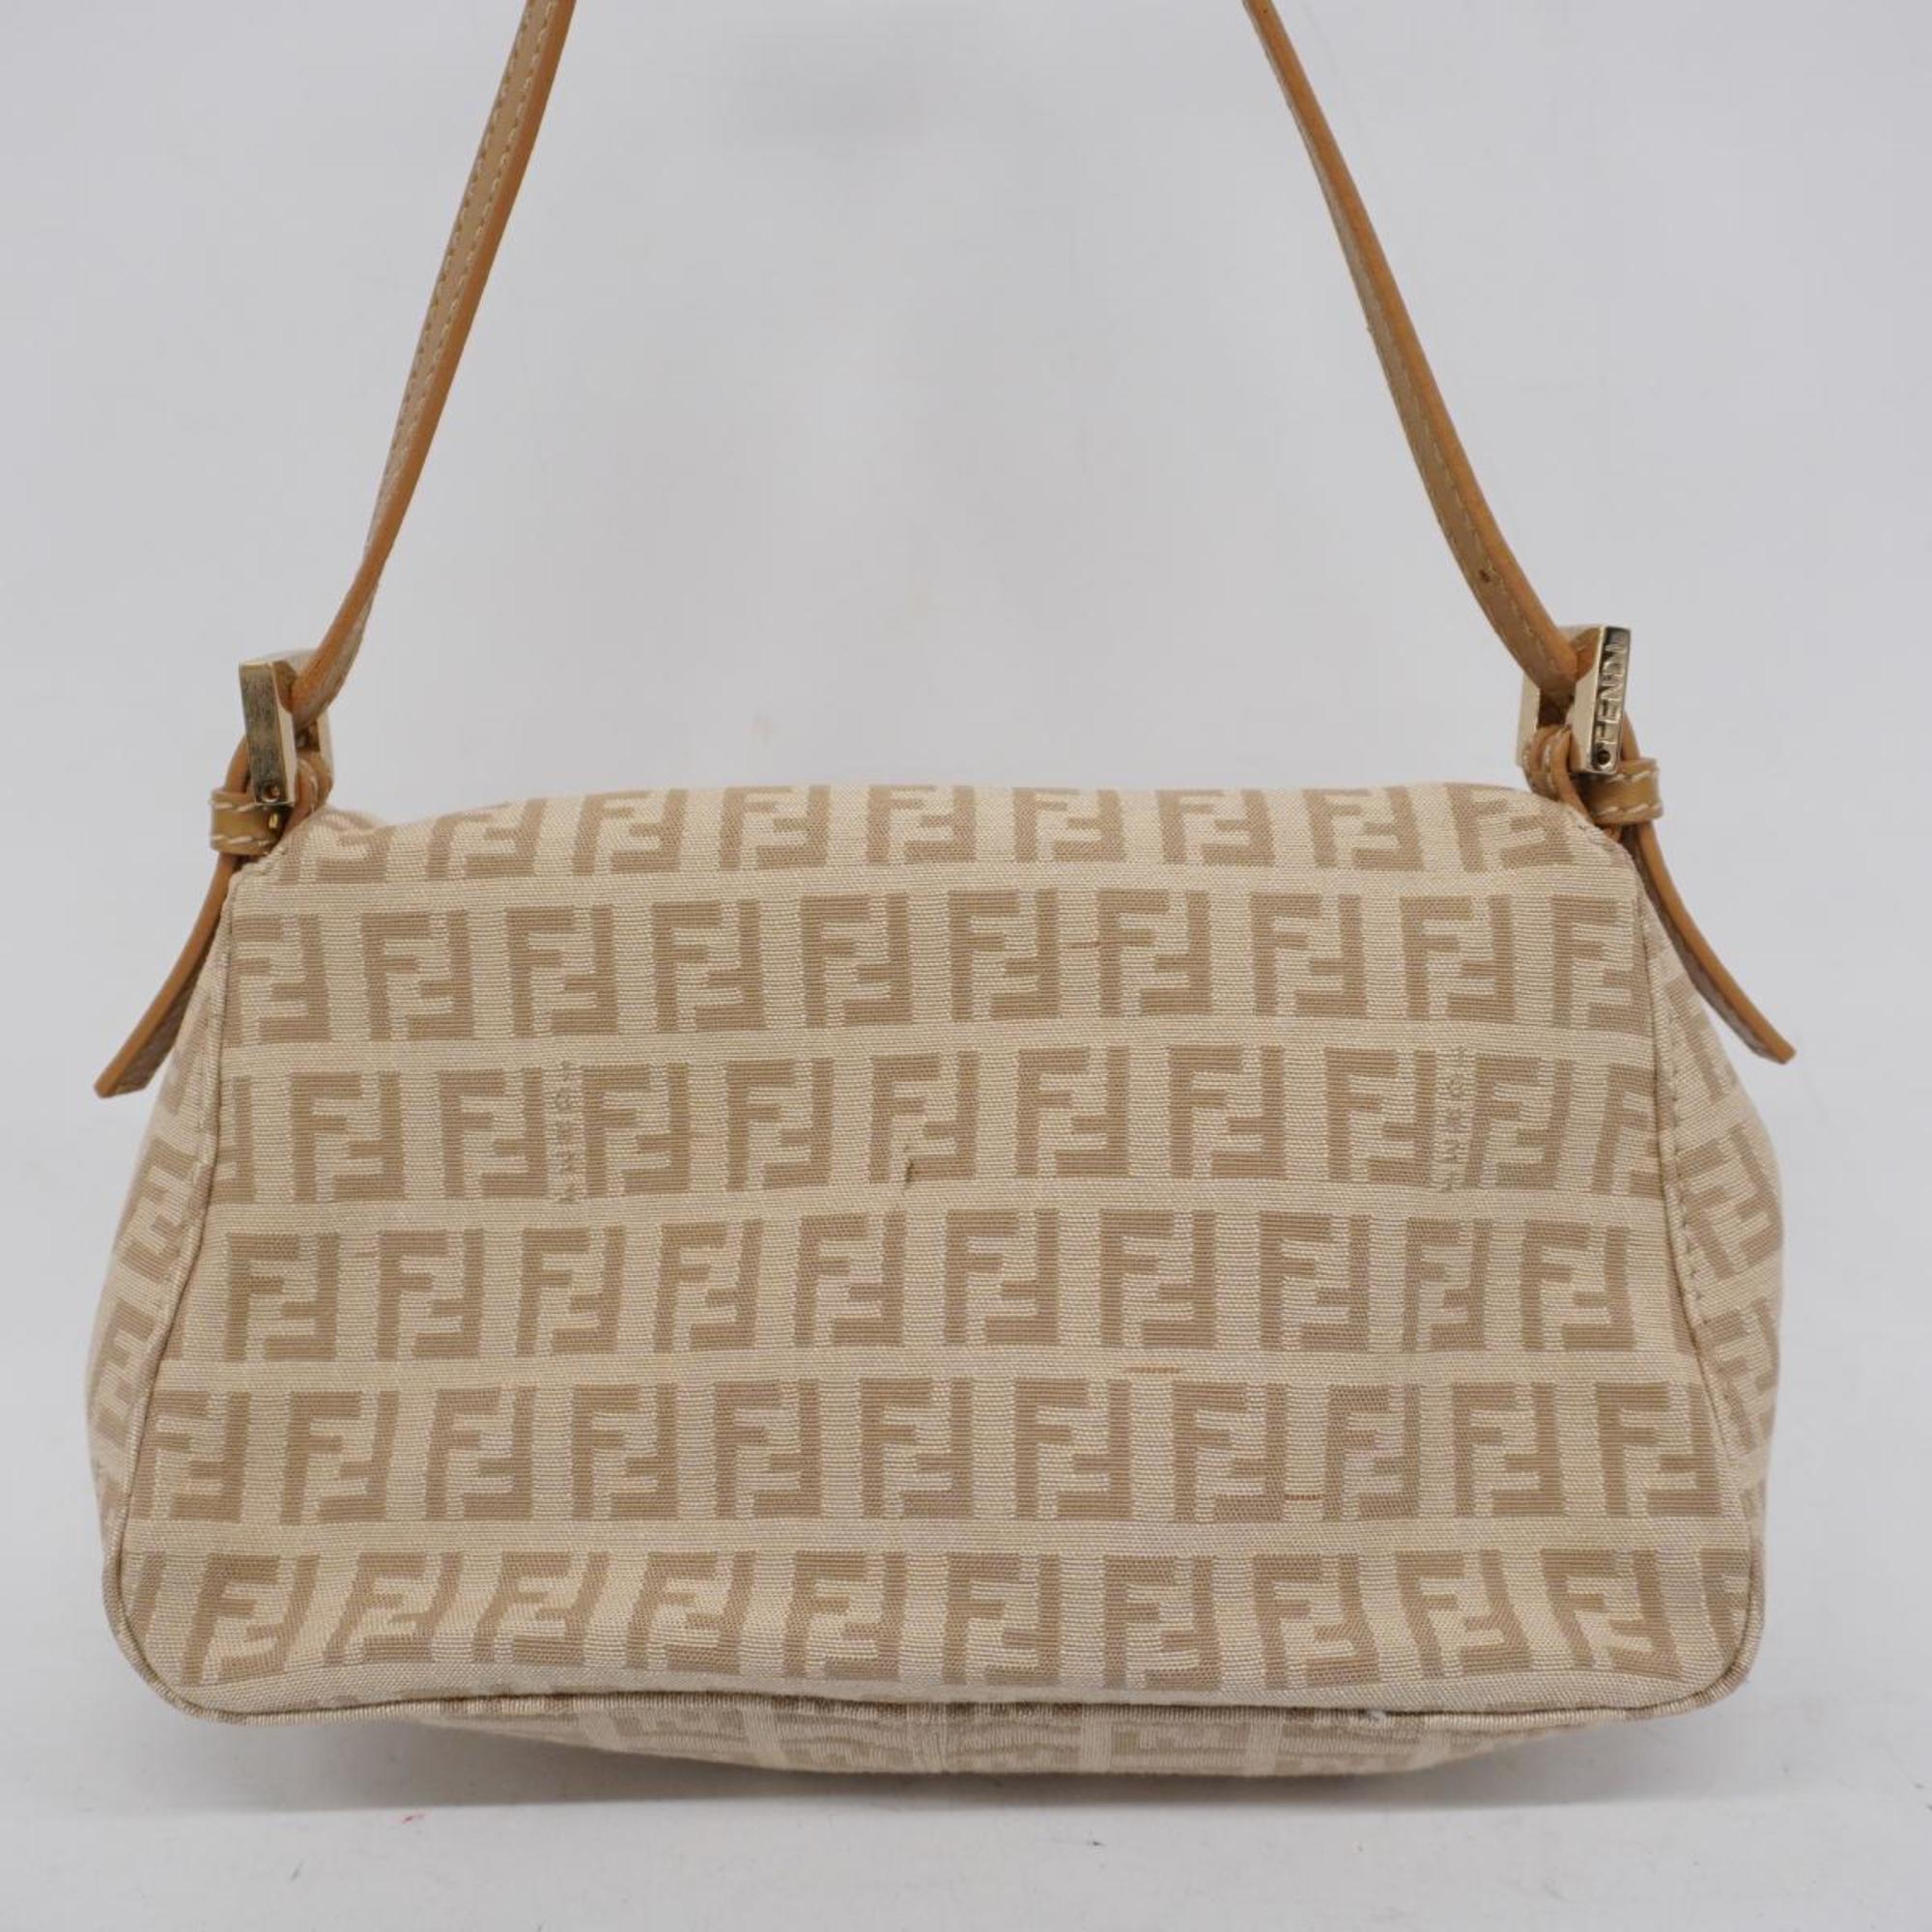 Fendi Zucchino handbag in nylon canvas, beige and champagne for women